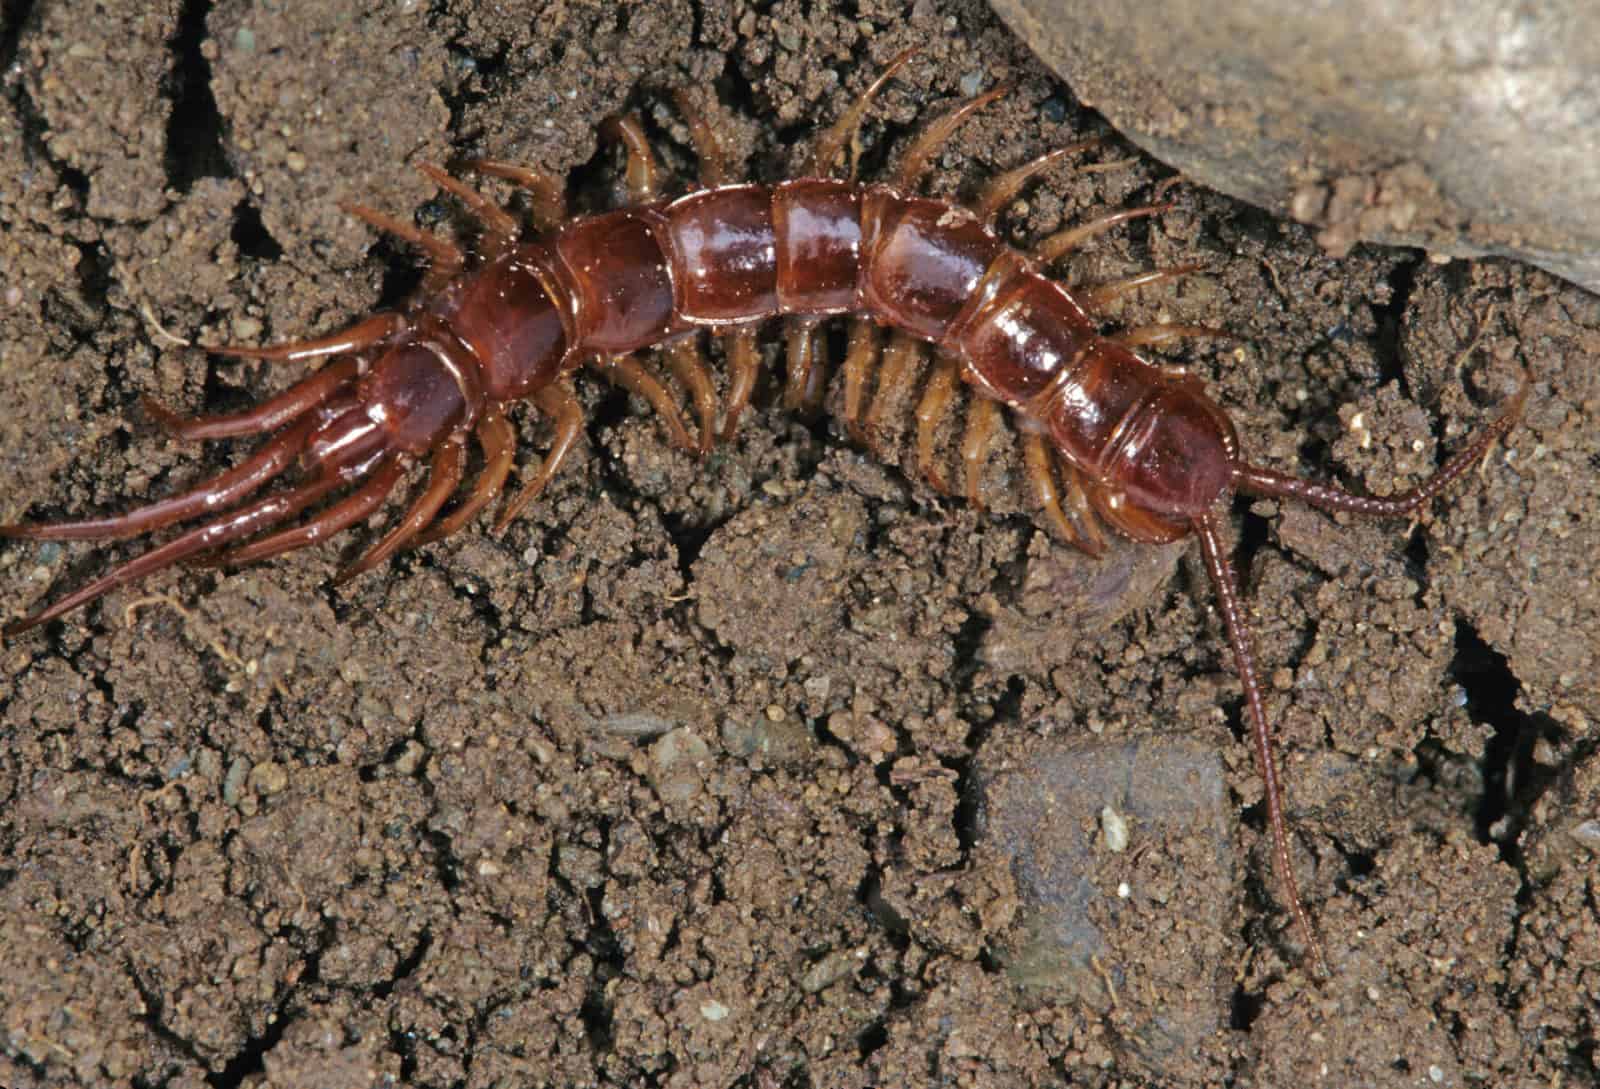 Centipede on earth